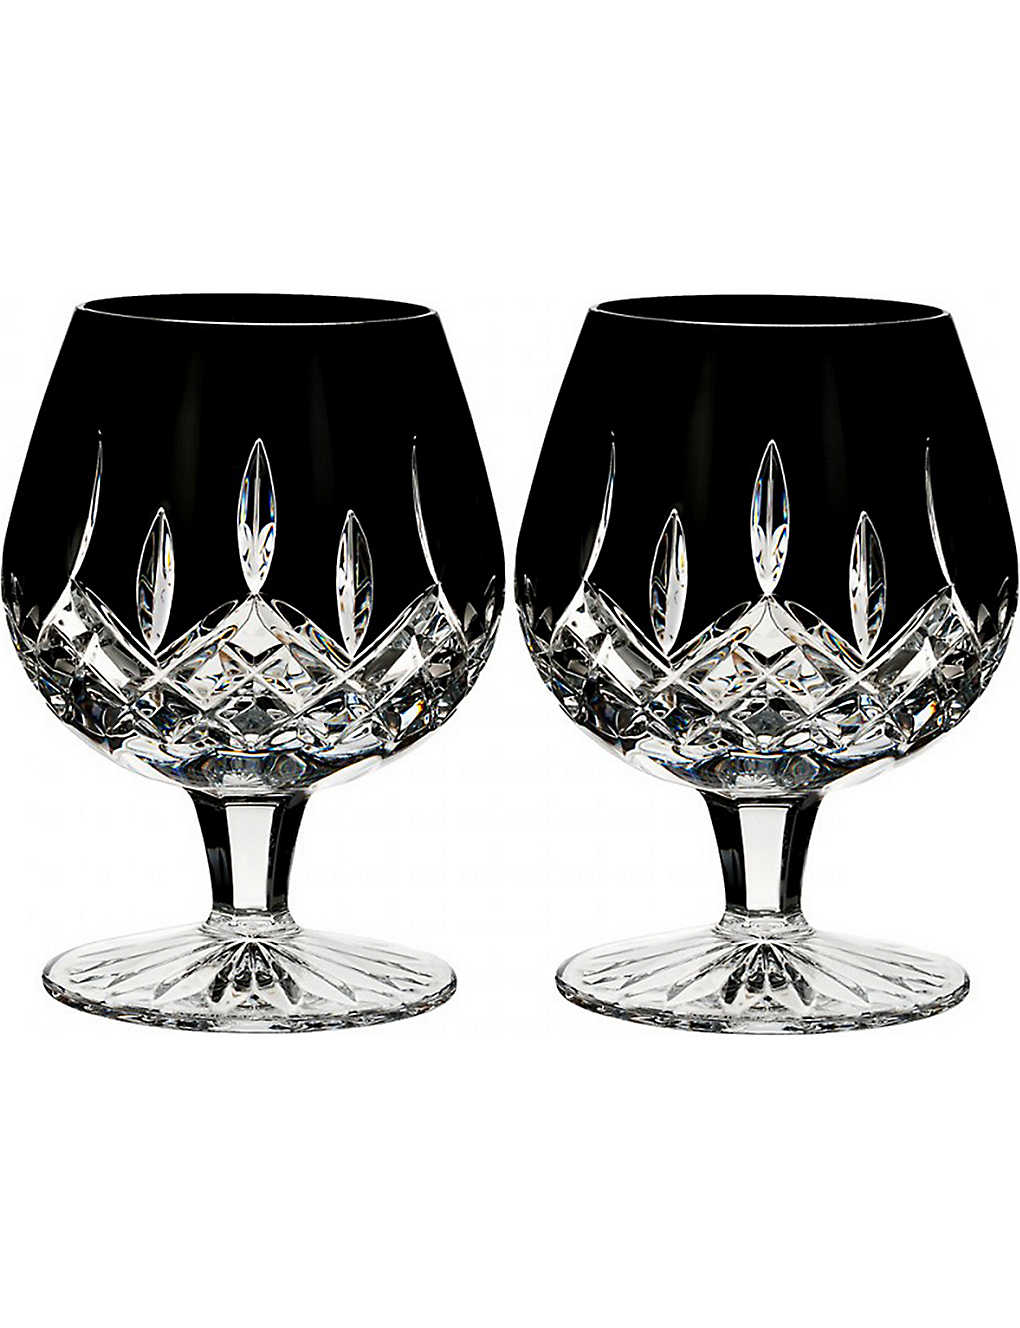 WATERFORD Lismore Black brandy glasses (set of 2)